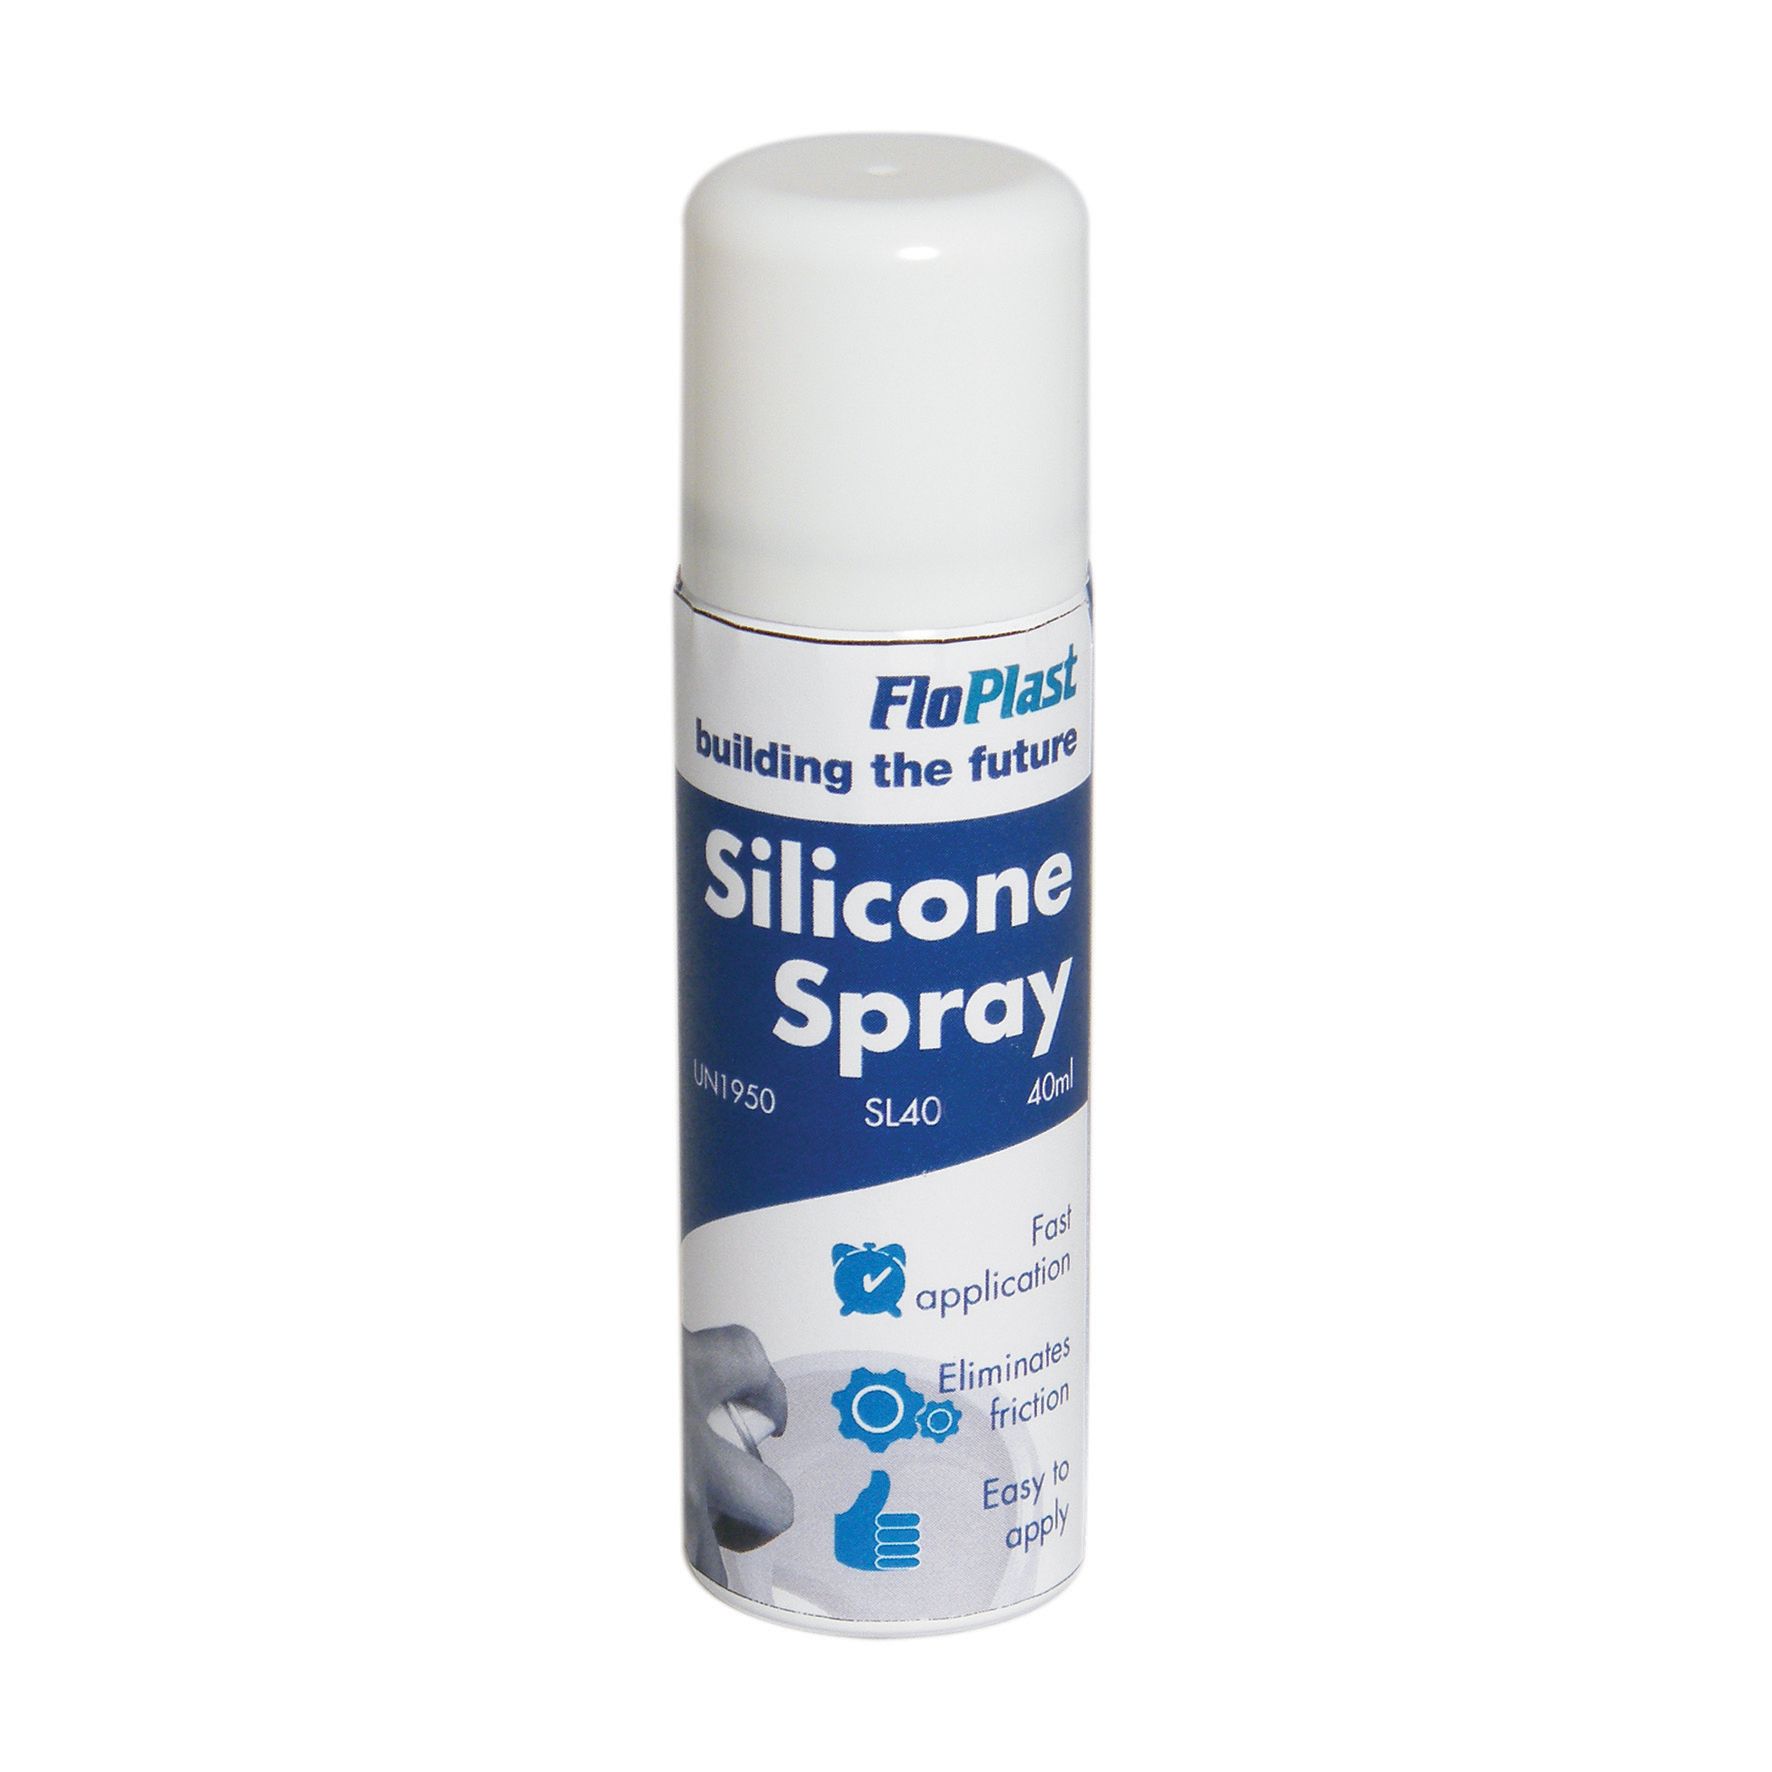 Image of FloPlast 40ml Silicon Spray